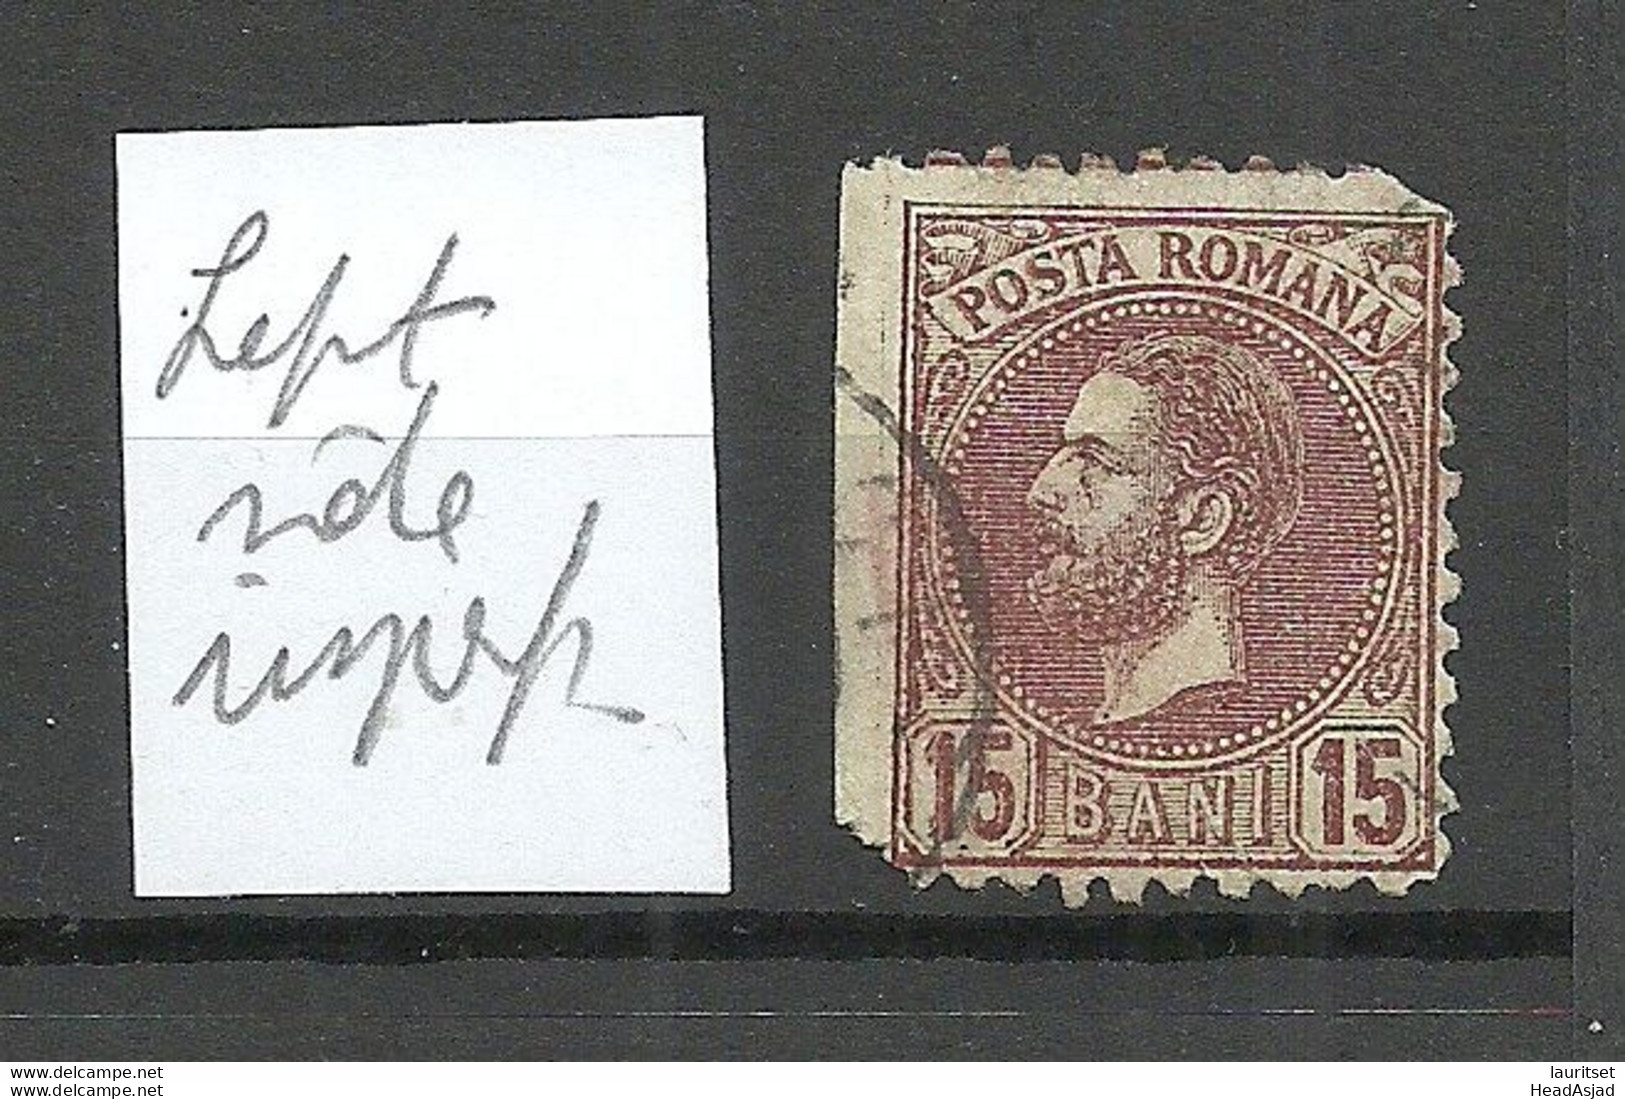 ROMANIA Rumänien 1880 Michel 55 O Variety Error = Left Side Imperforated - 1858-1880 Fürstentum Moldau